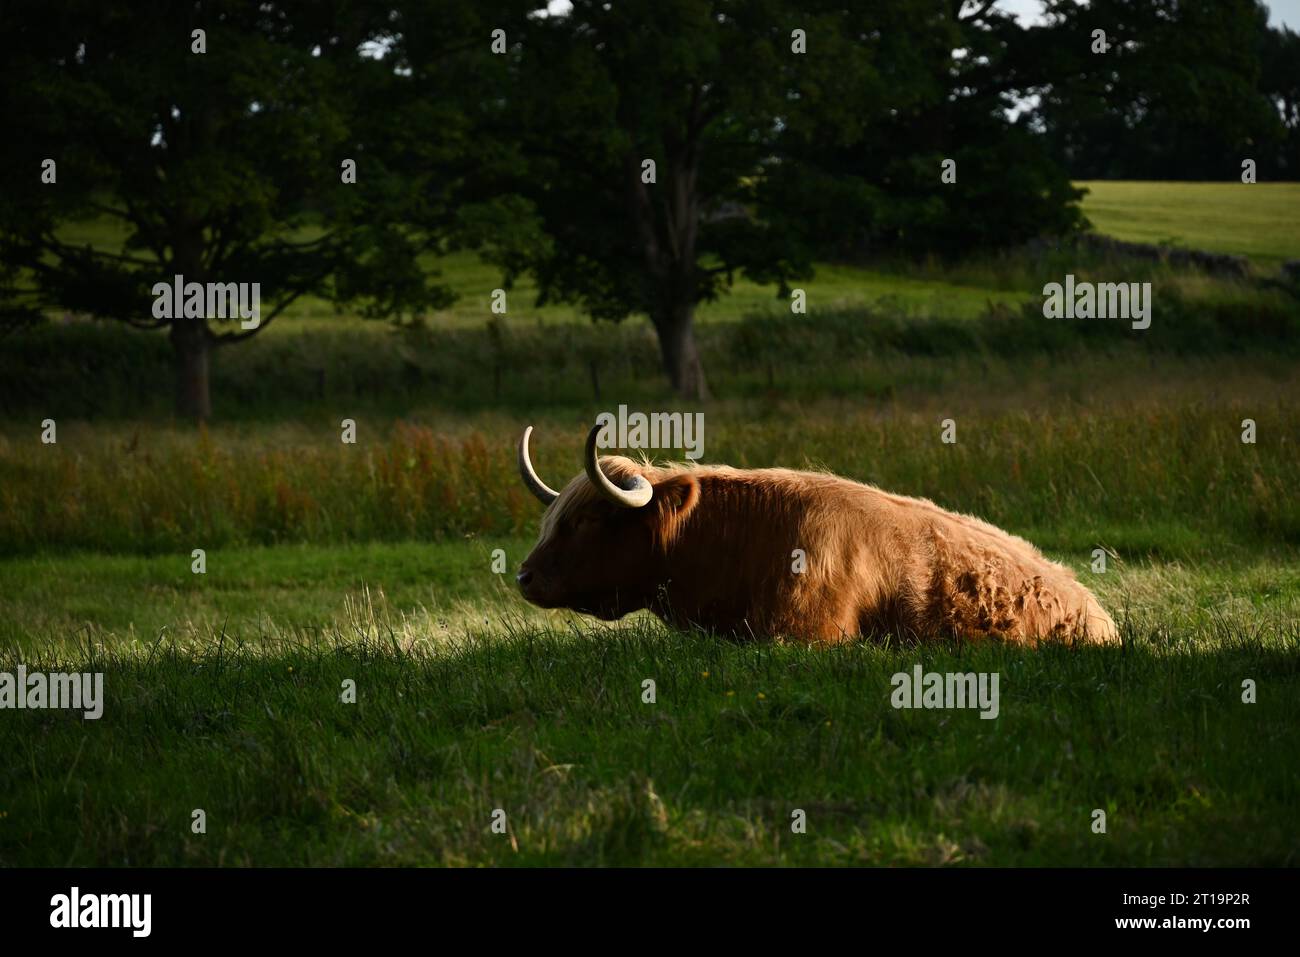 A peaceful hairy coos or highland cow in a field near Edinburgh, Scotland. Stock Photo